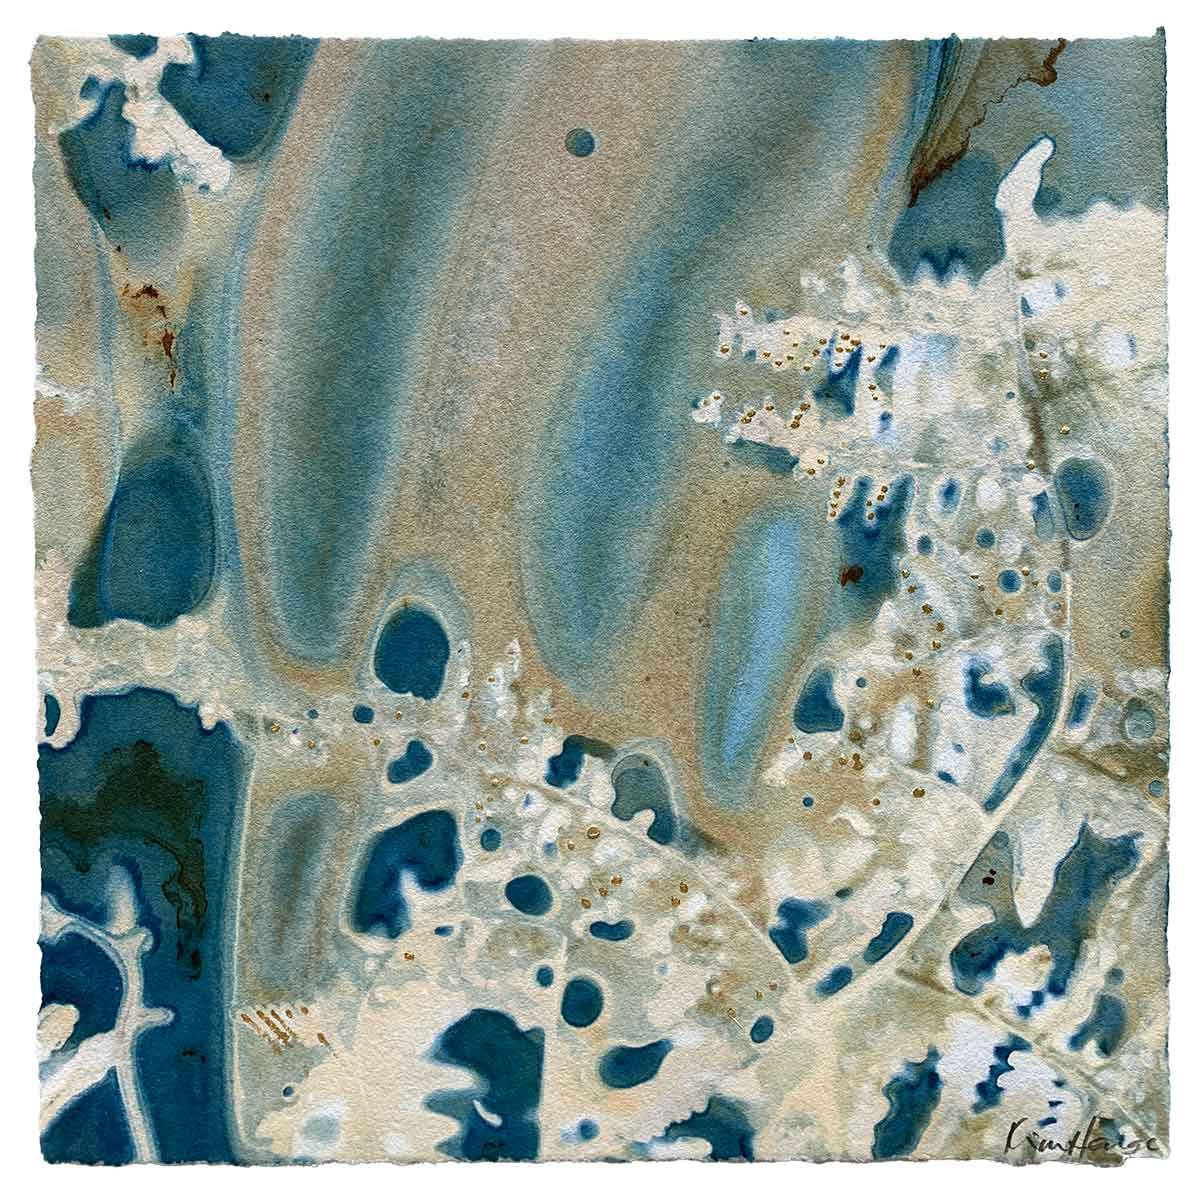 Water's Harvest 4 - Cyanotype - Kim Herringe